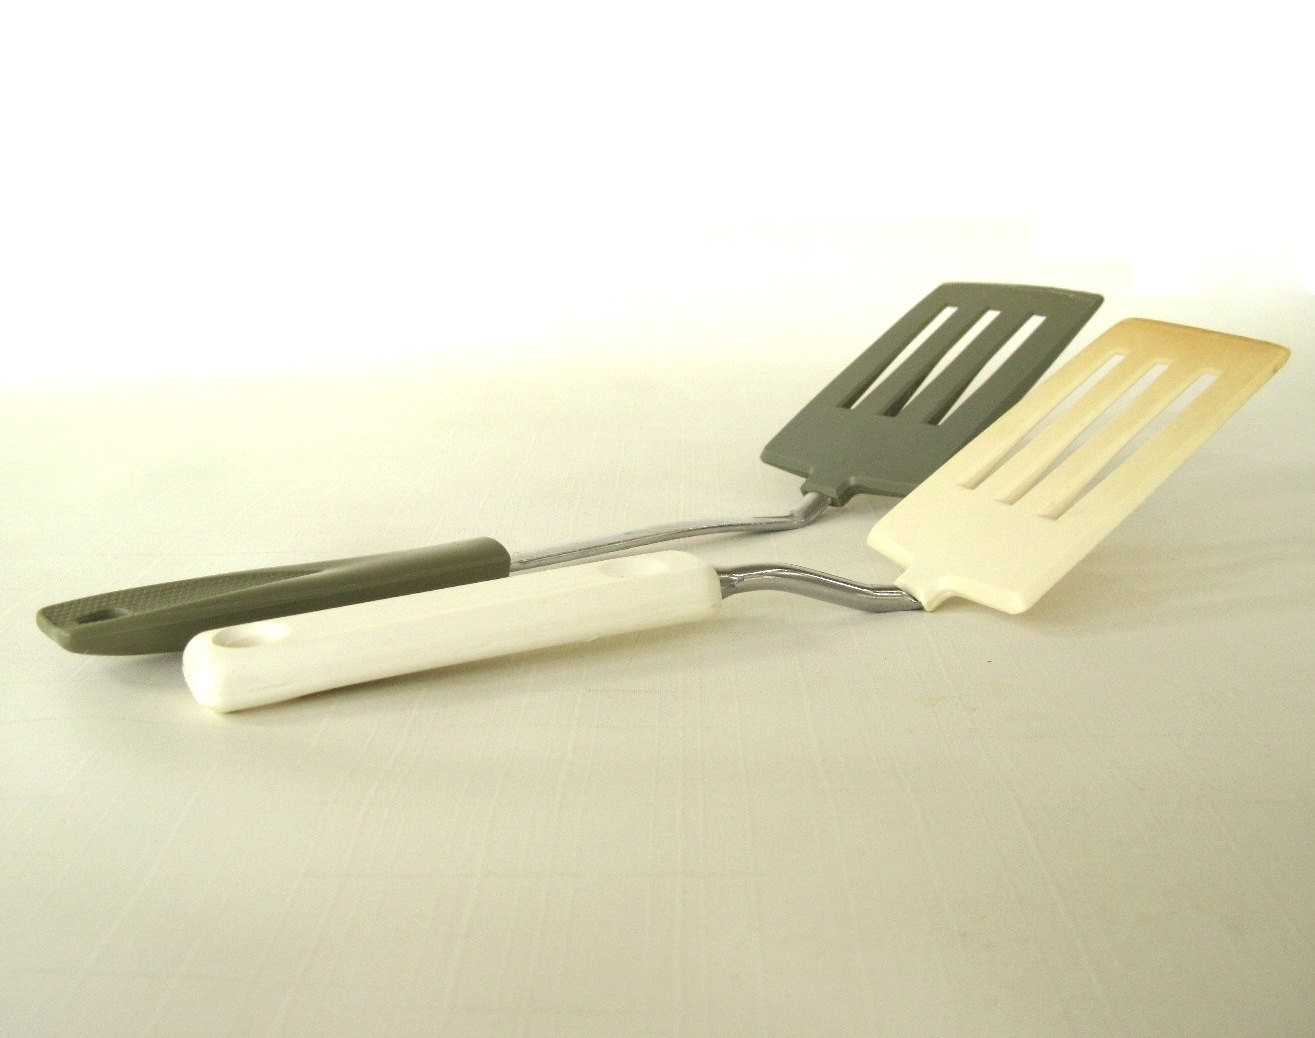 Ekco spatula s nylon plastic kitchen utensil long or short